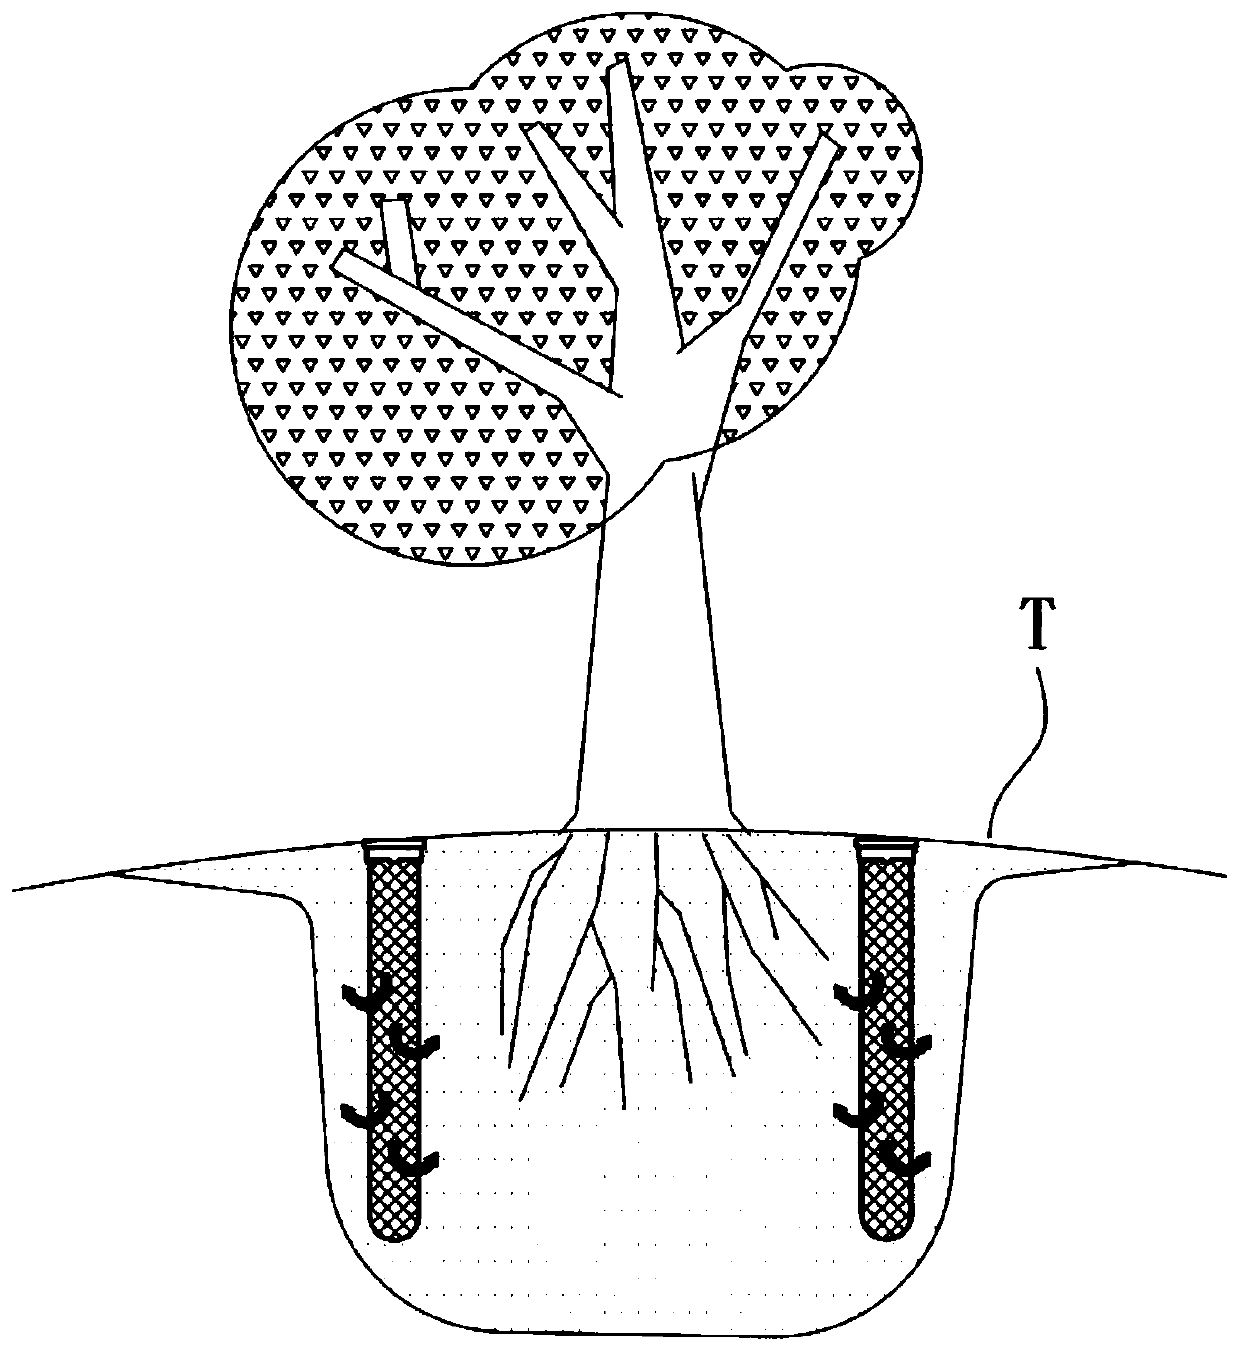 Vertical irrigator for large arbor and distribution method of vertical irrigator